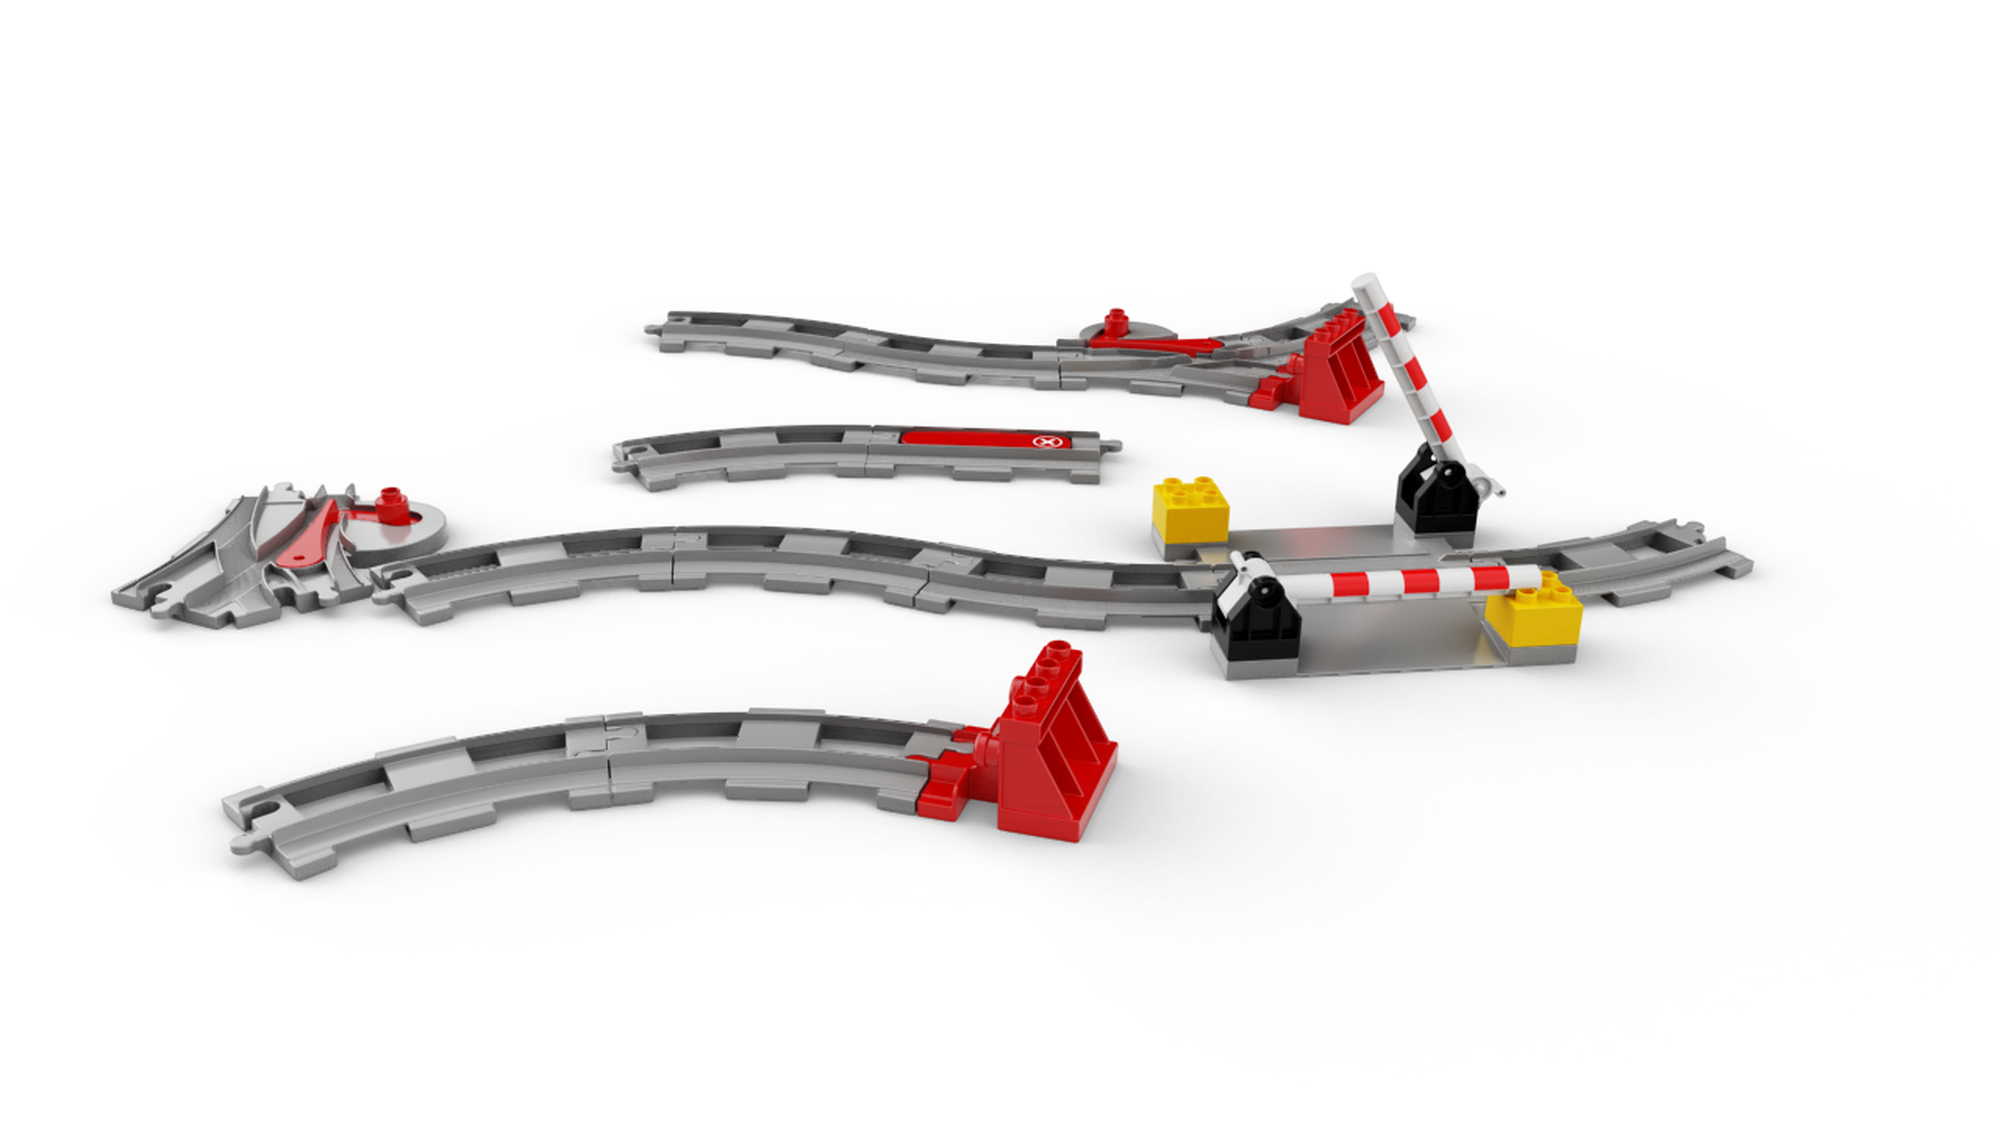  LEGO DUPLO Town Train Tracks Expansion Set 10882